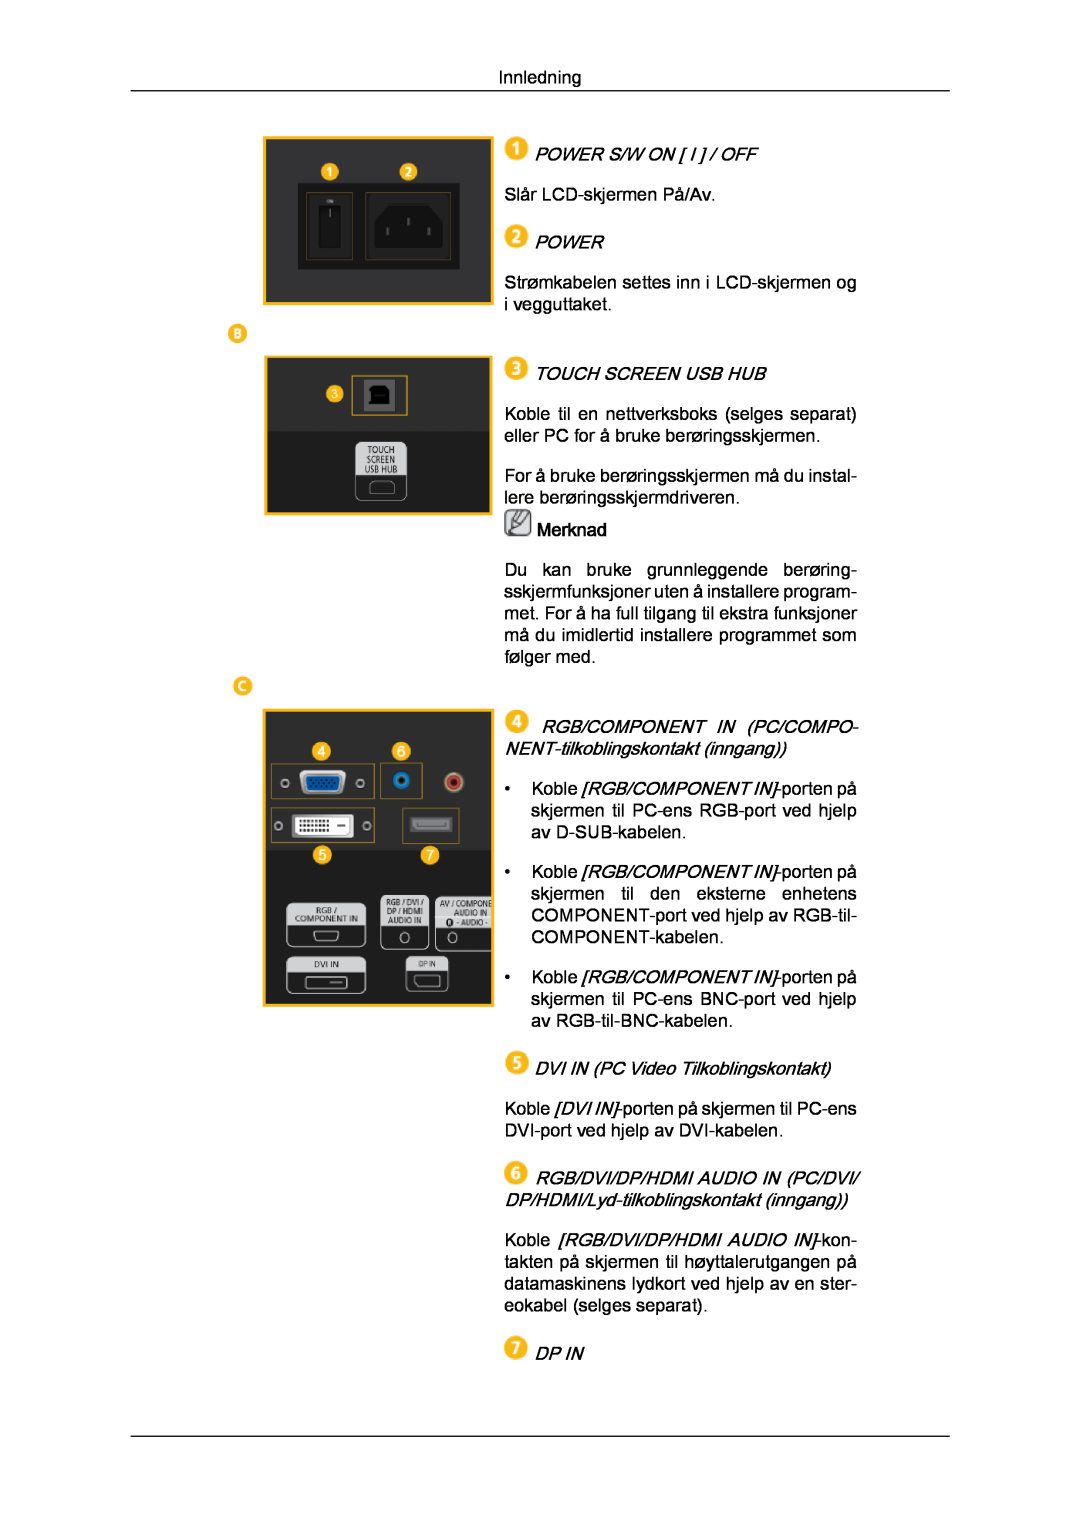 Samsung LH40CRPMBD/EN manual Power S/W On I / Off, Touch Screen Usb Hub, DVI IN PC Video Tilkoblingskontakt, Dp In, Merknad 